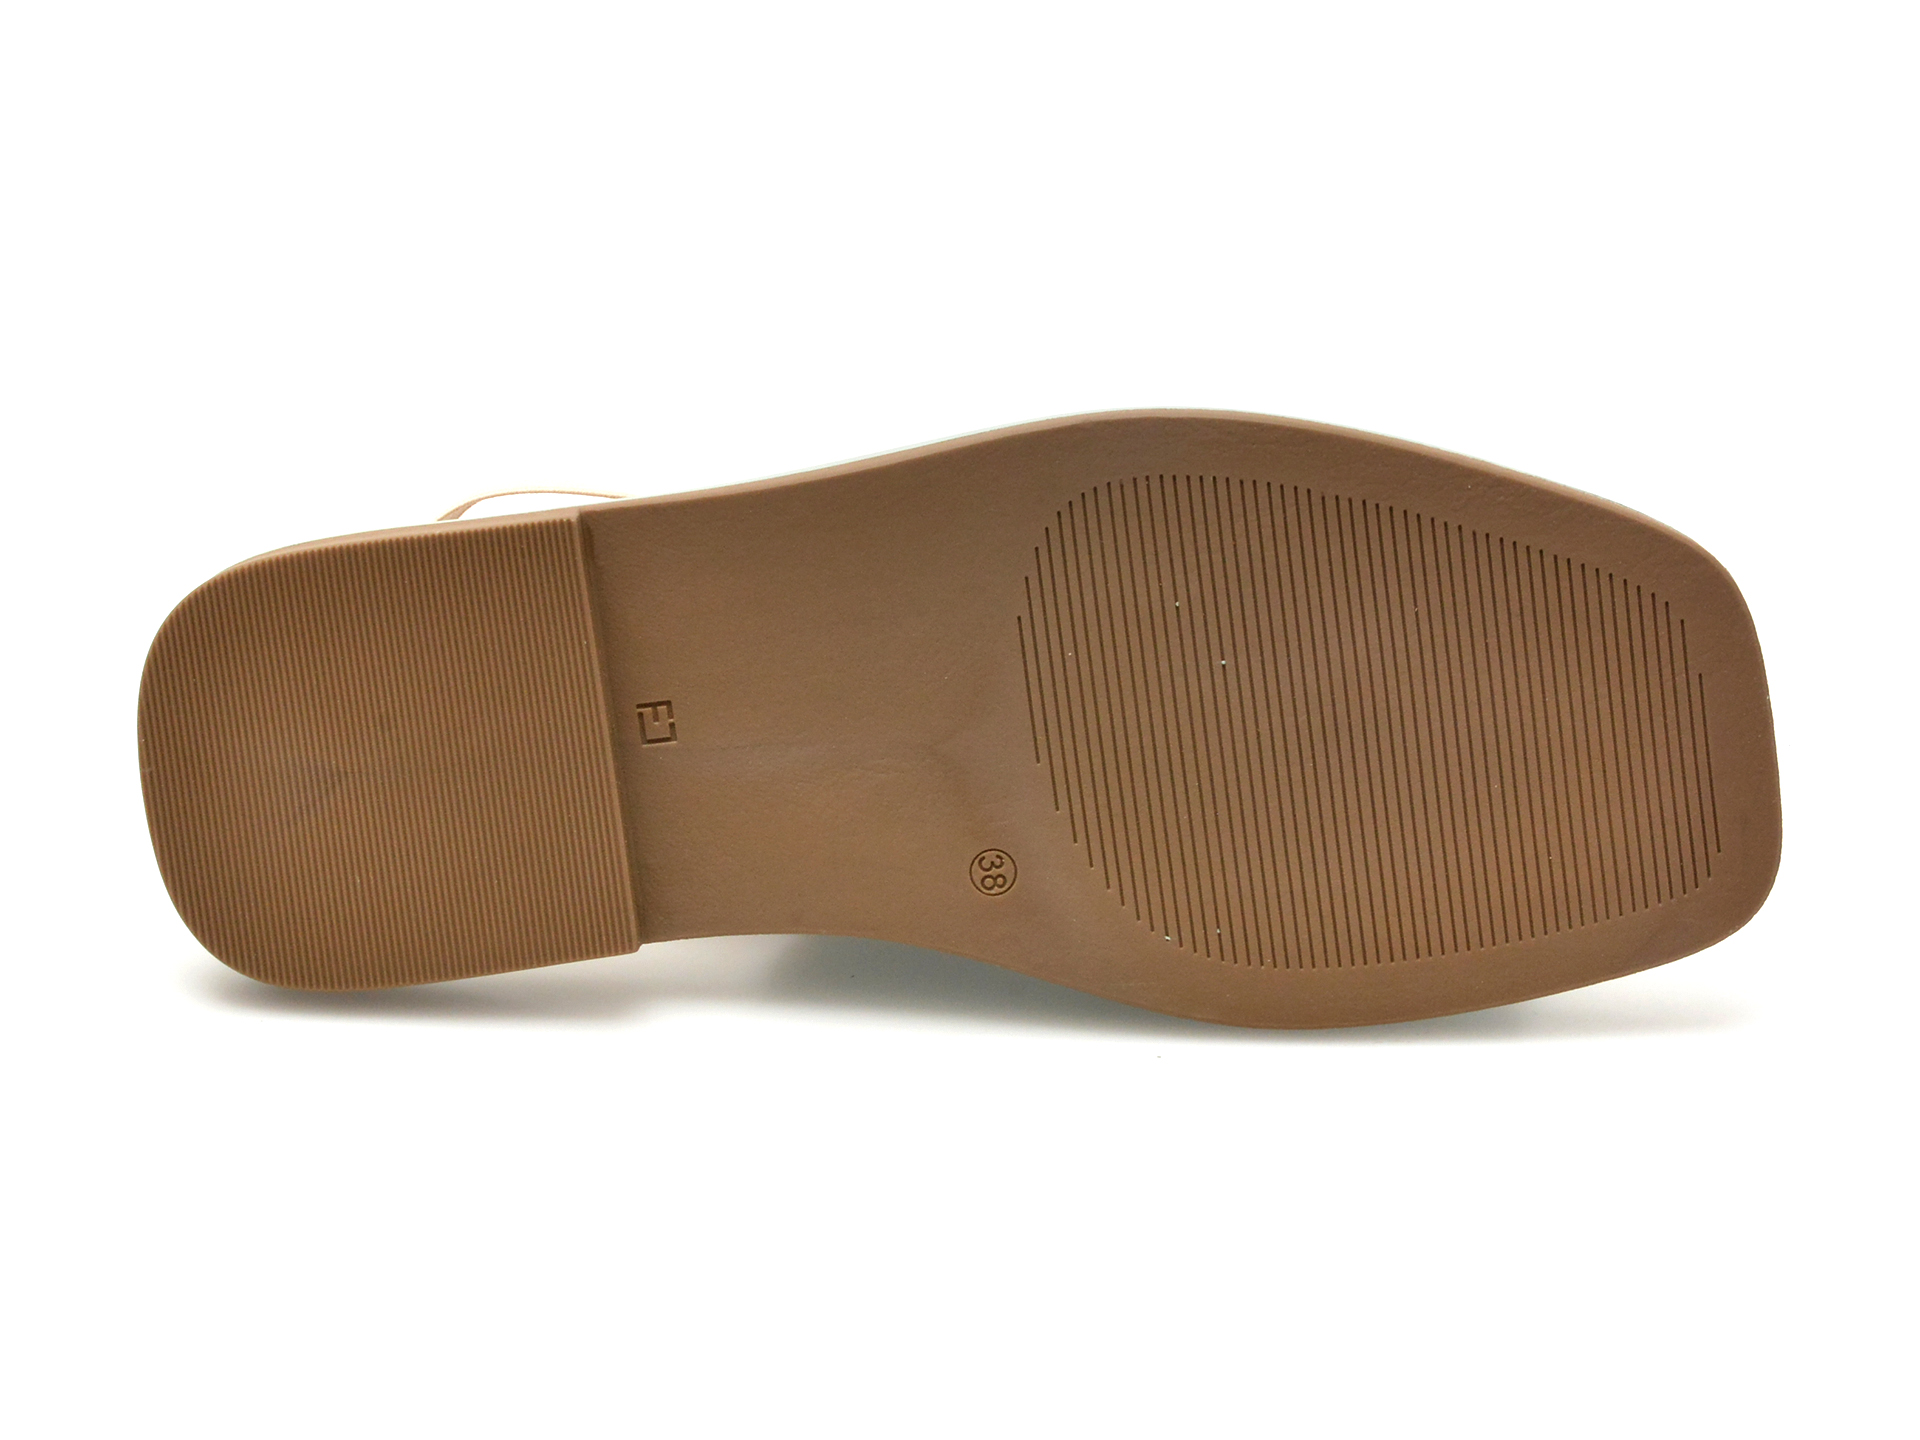 Sandale FLAVIA PASSINI verzi, 5001802, din piele naturala